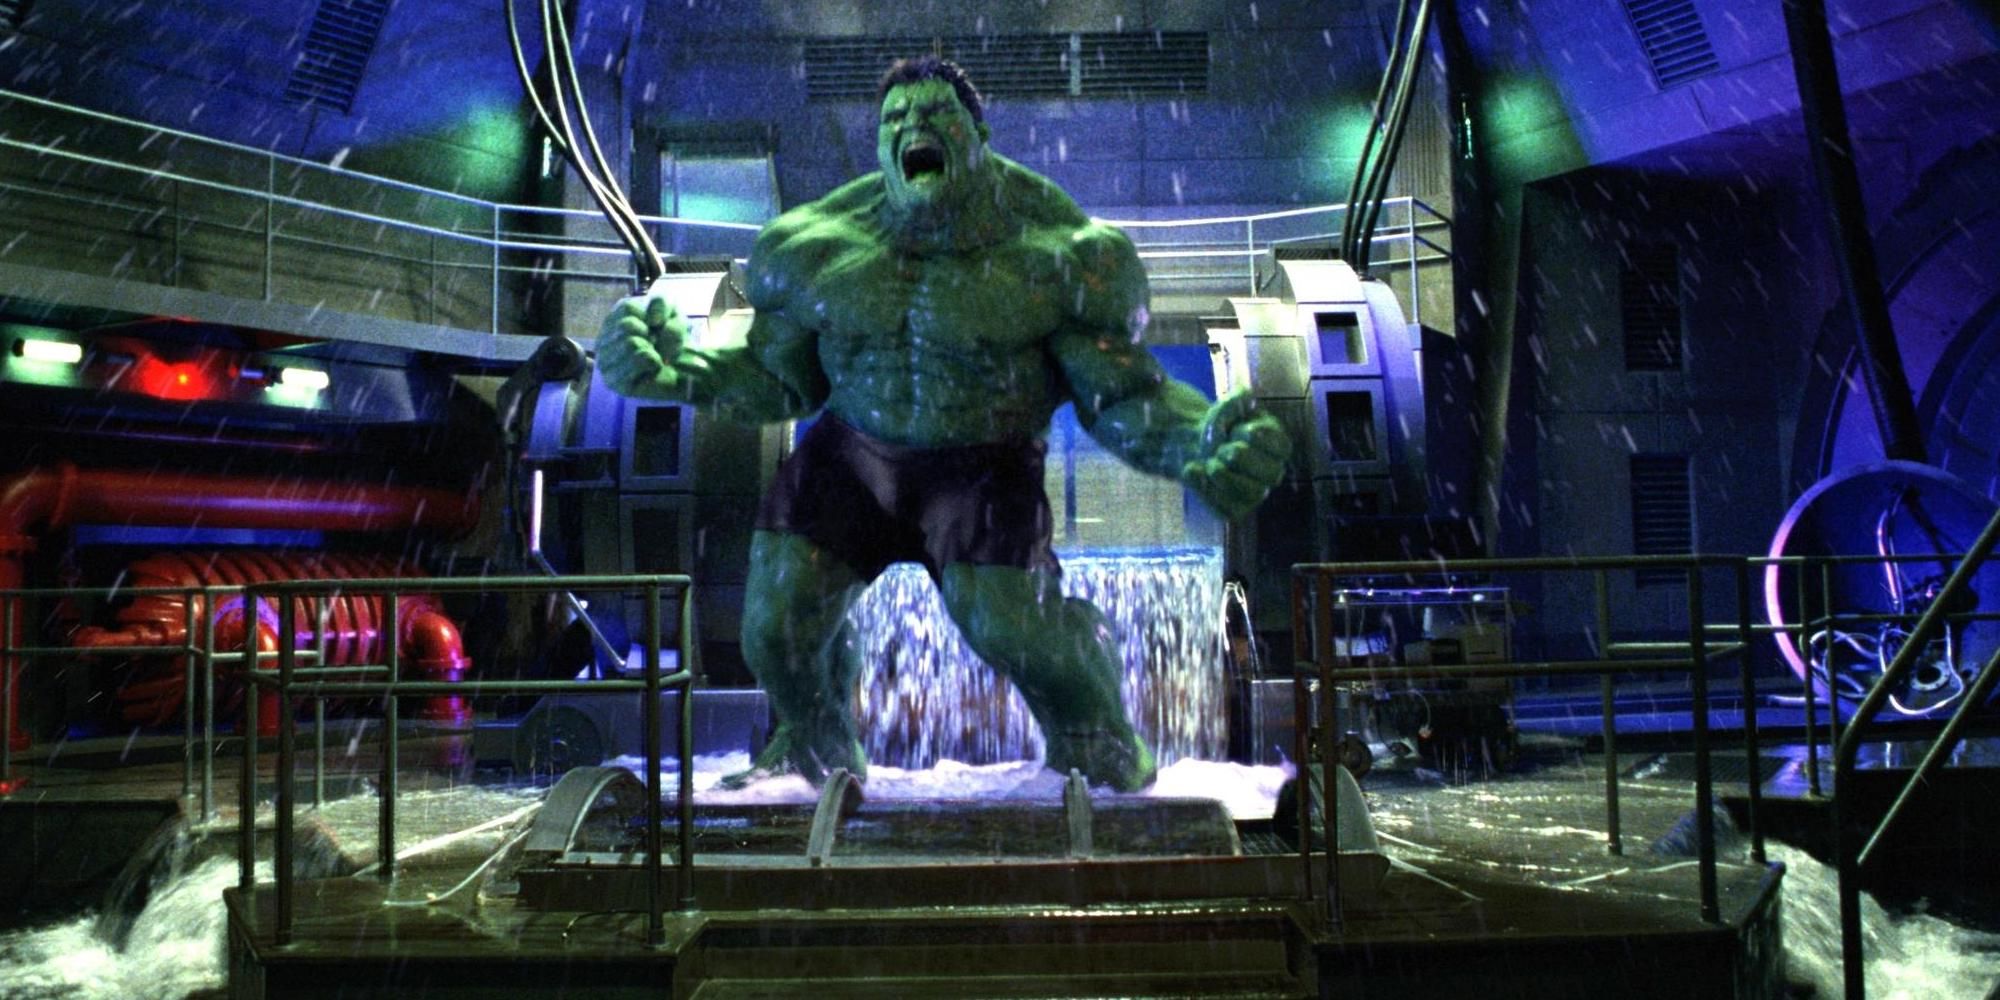 Eric Bana says he'll never return as the Hulk in the Marvel